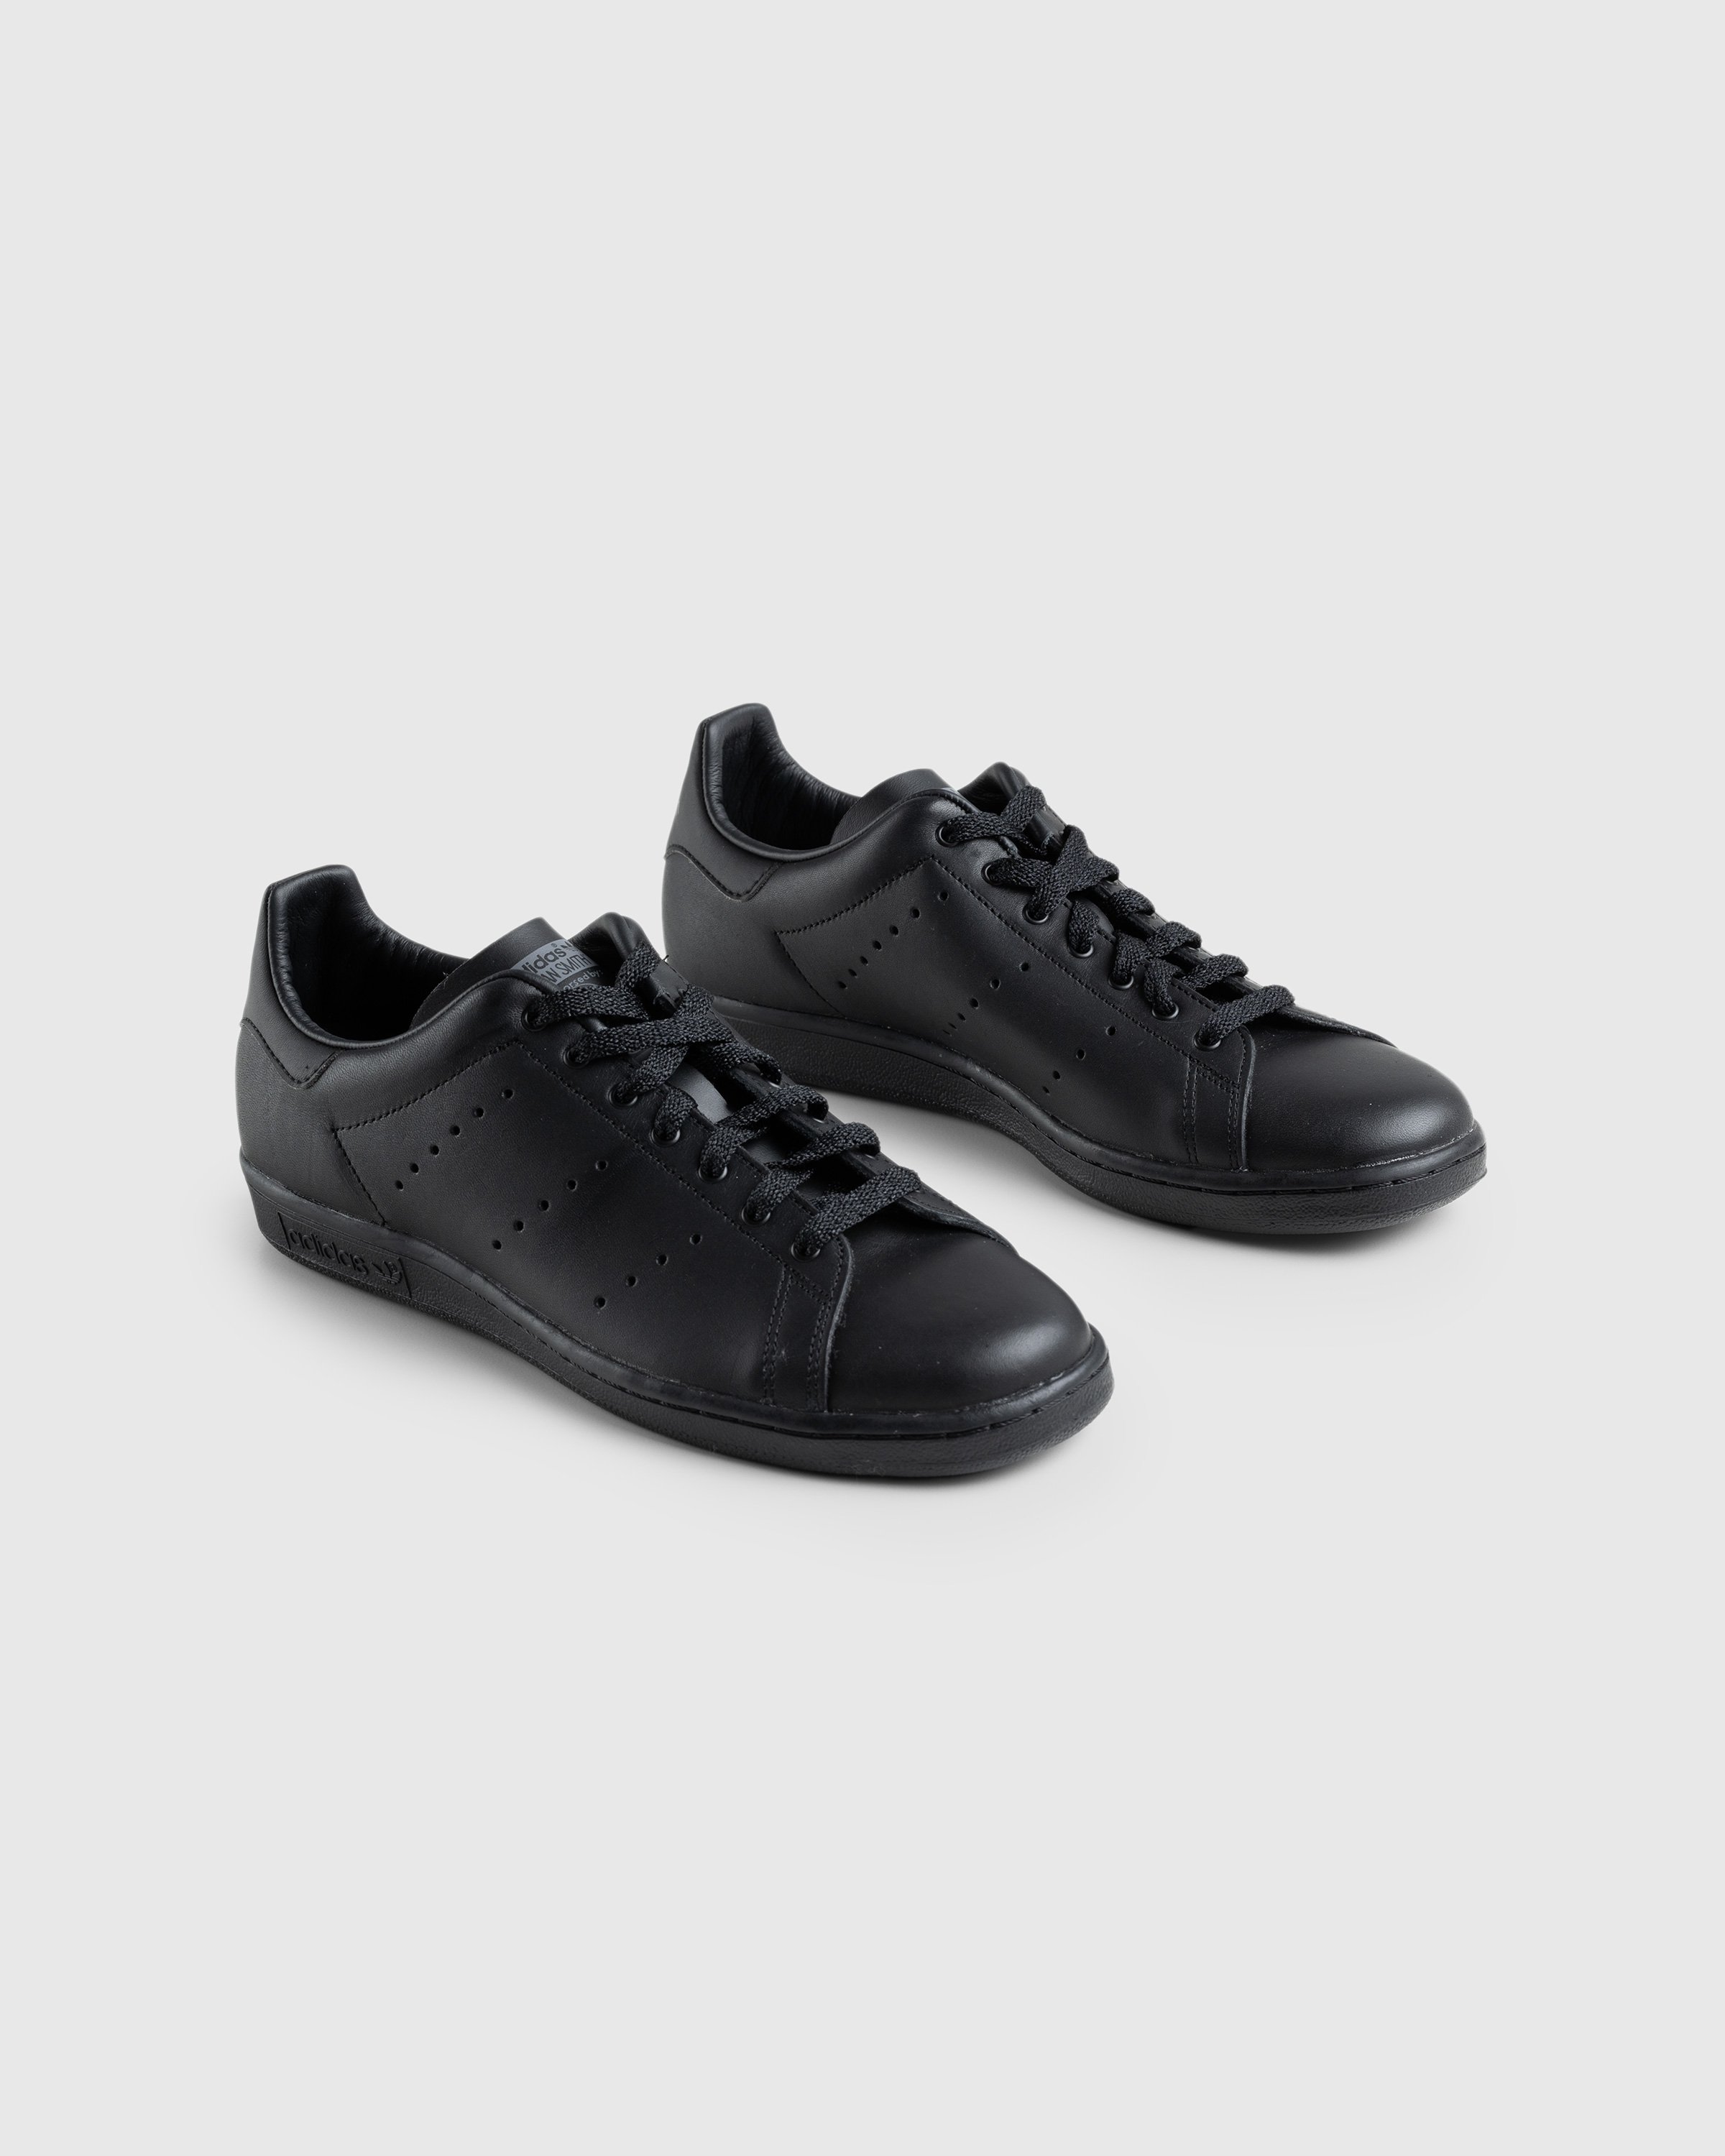 Adidas - Stan Smith 80s Black - Footwear - Black - Image 3